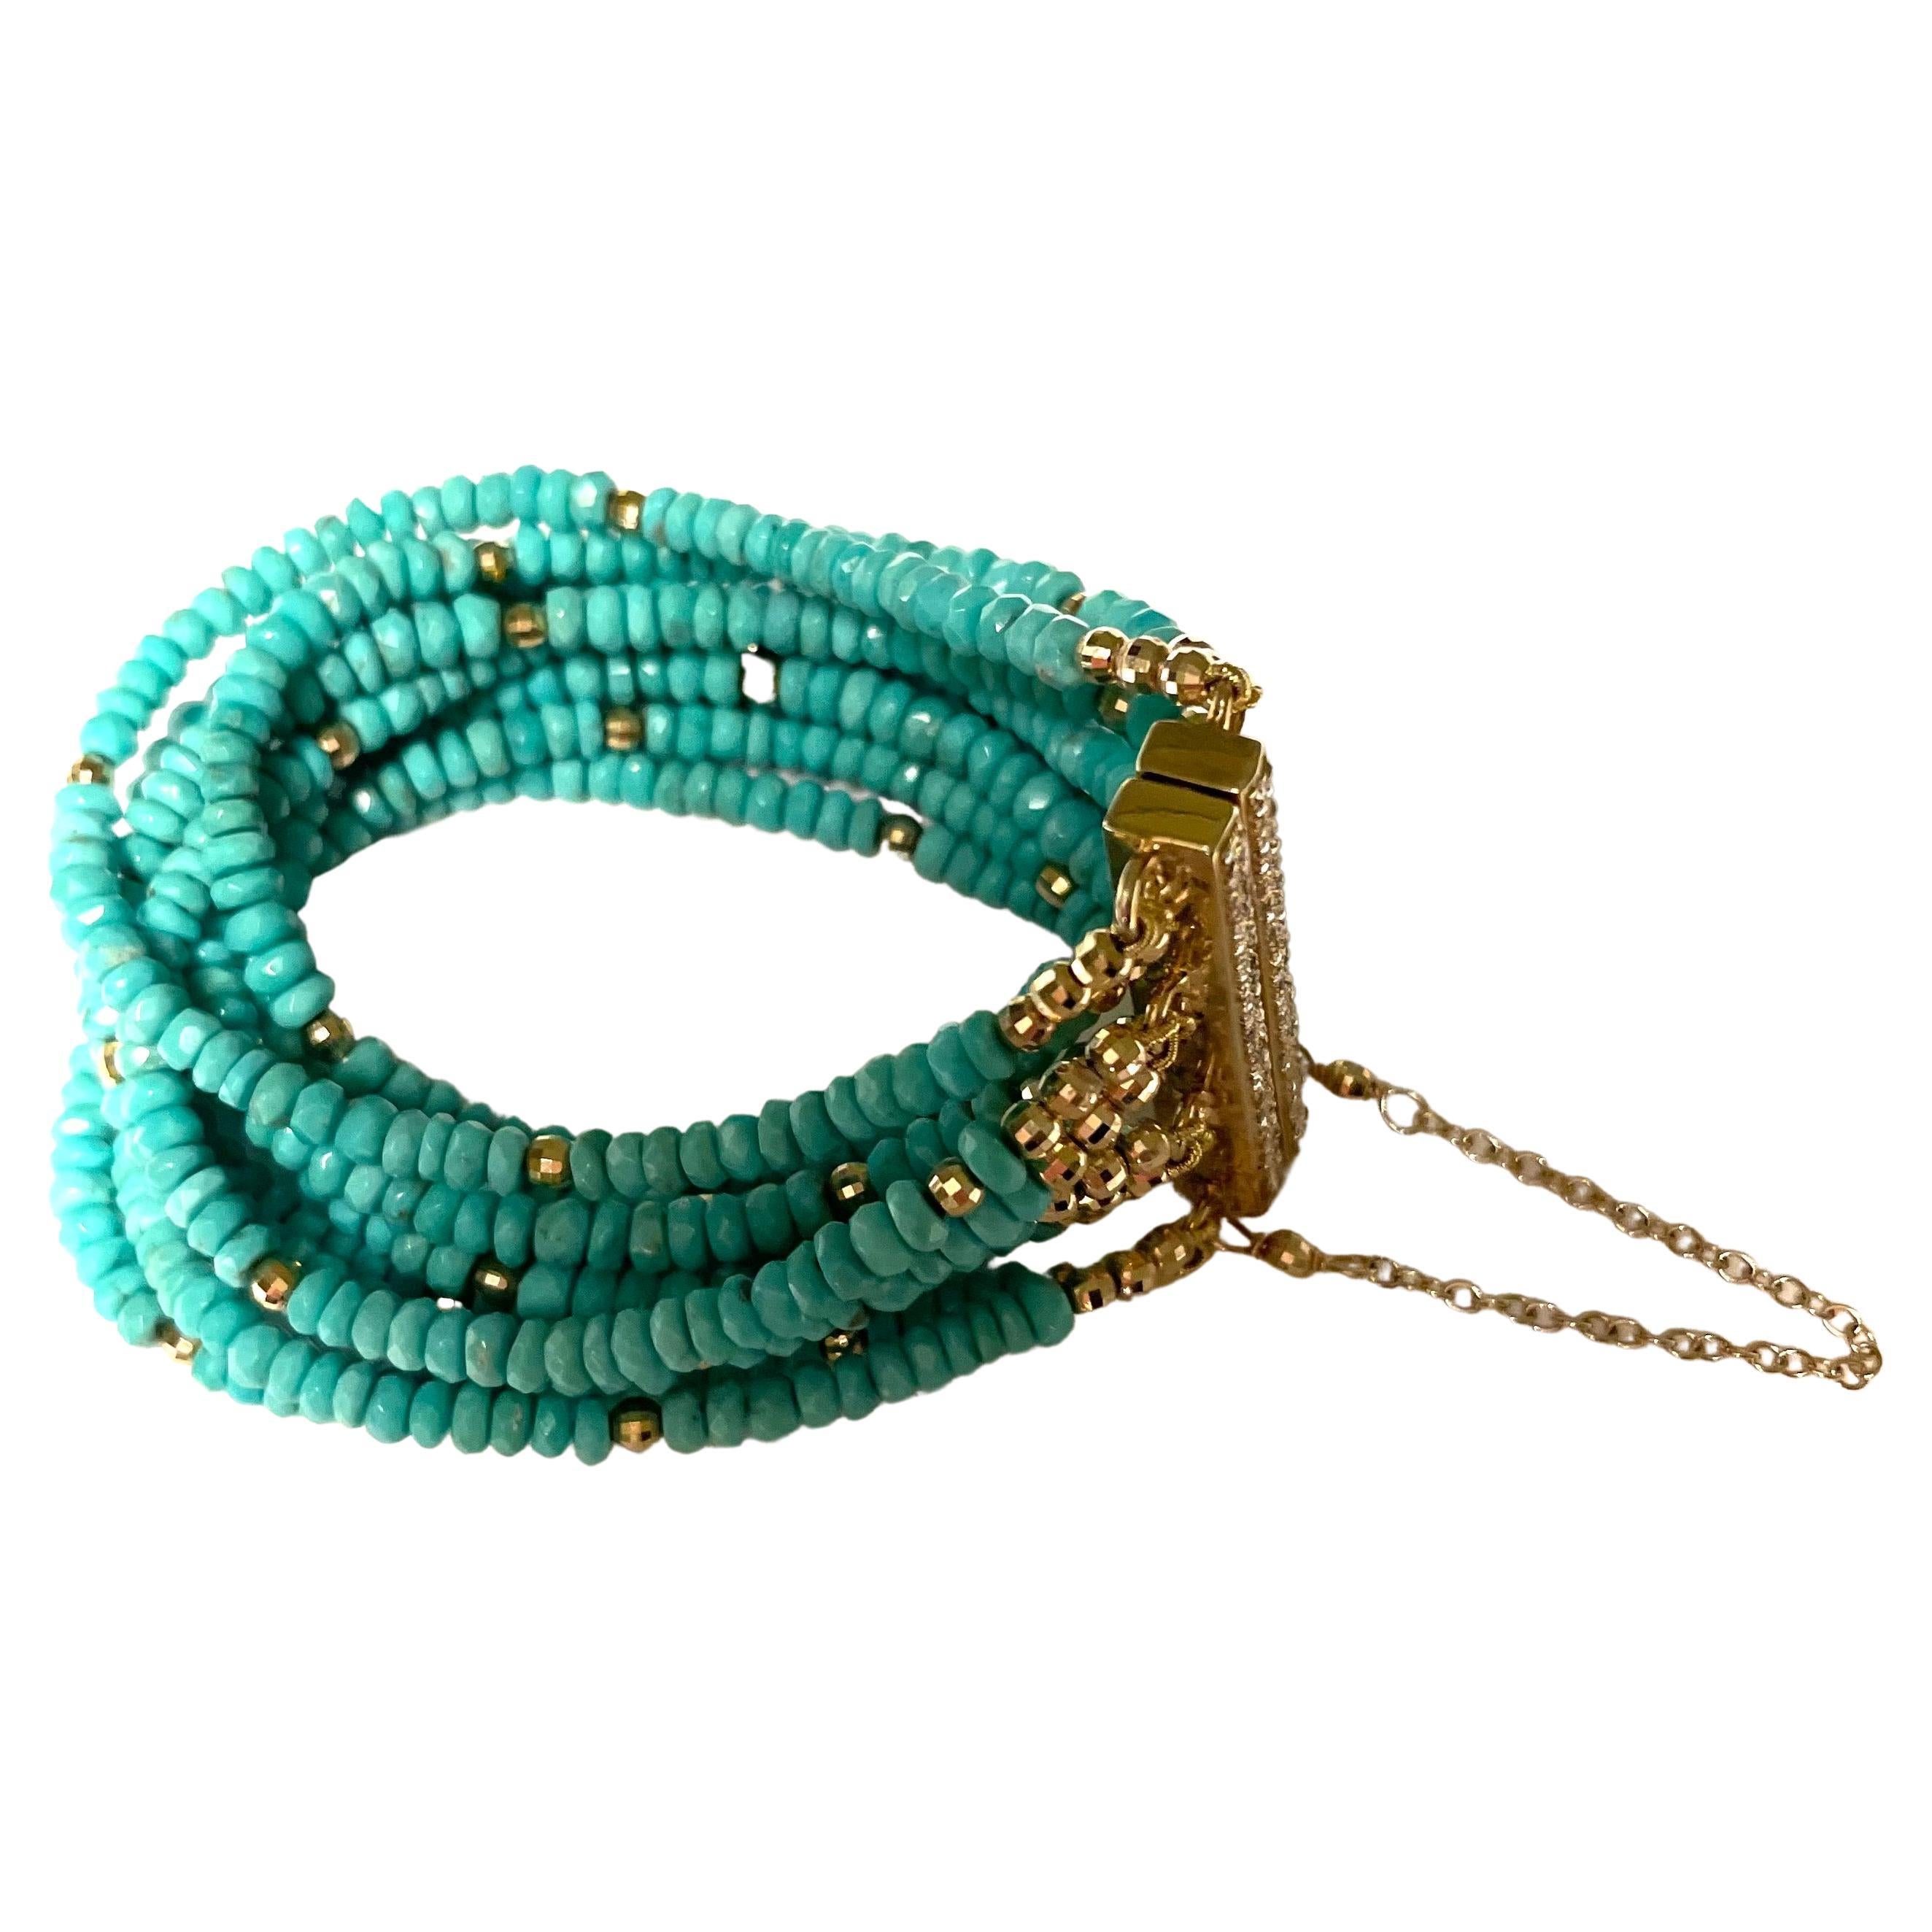 Bead Sleeping Beauty Turquoise with 14k Gold Balls Bracelet